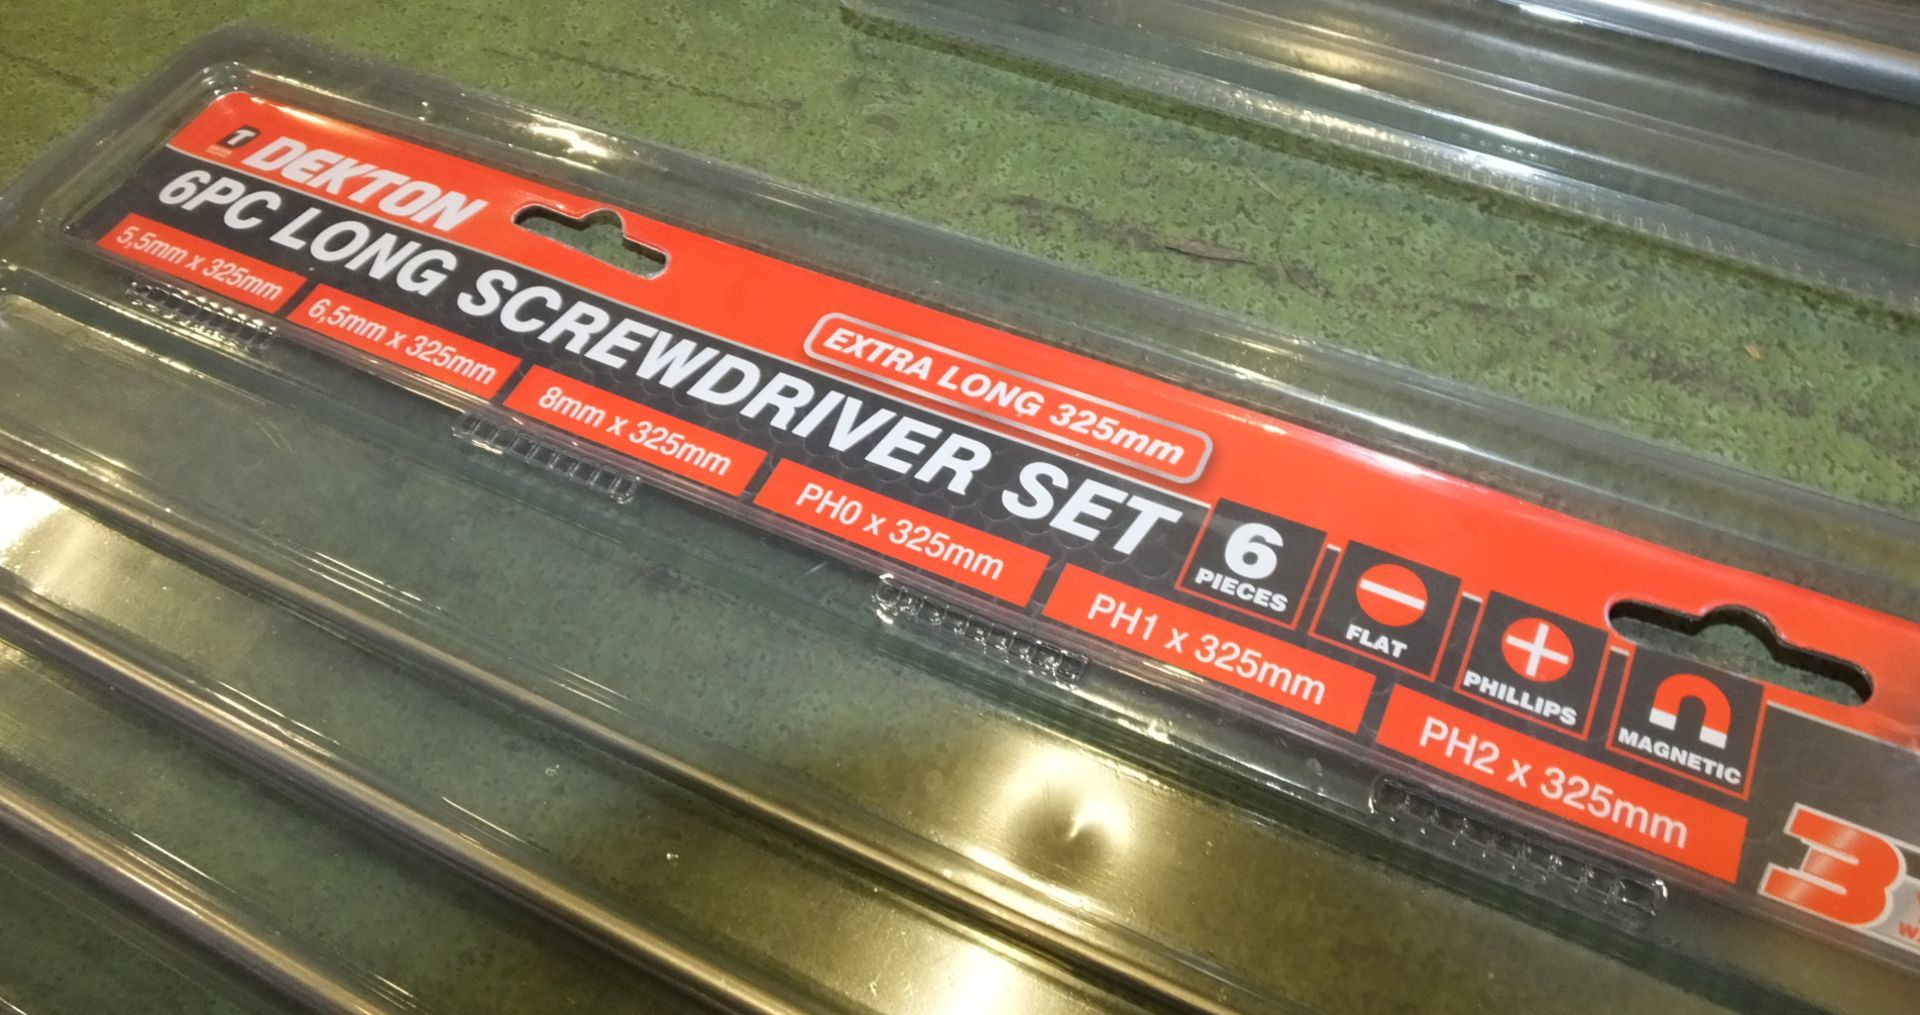 2x Dekton 6PC long screwdriver set - Image 2 of 2